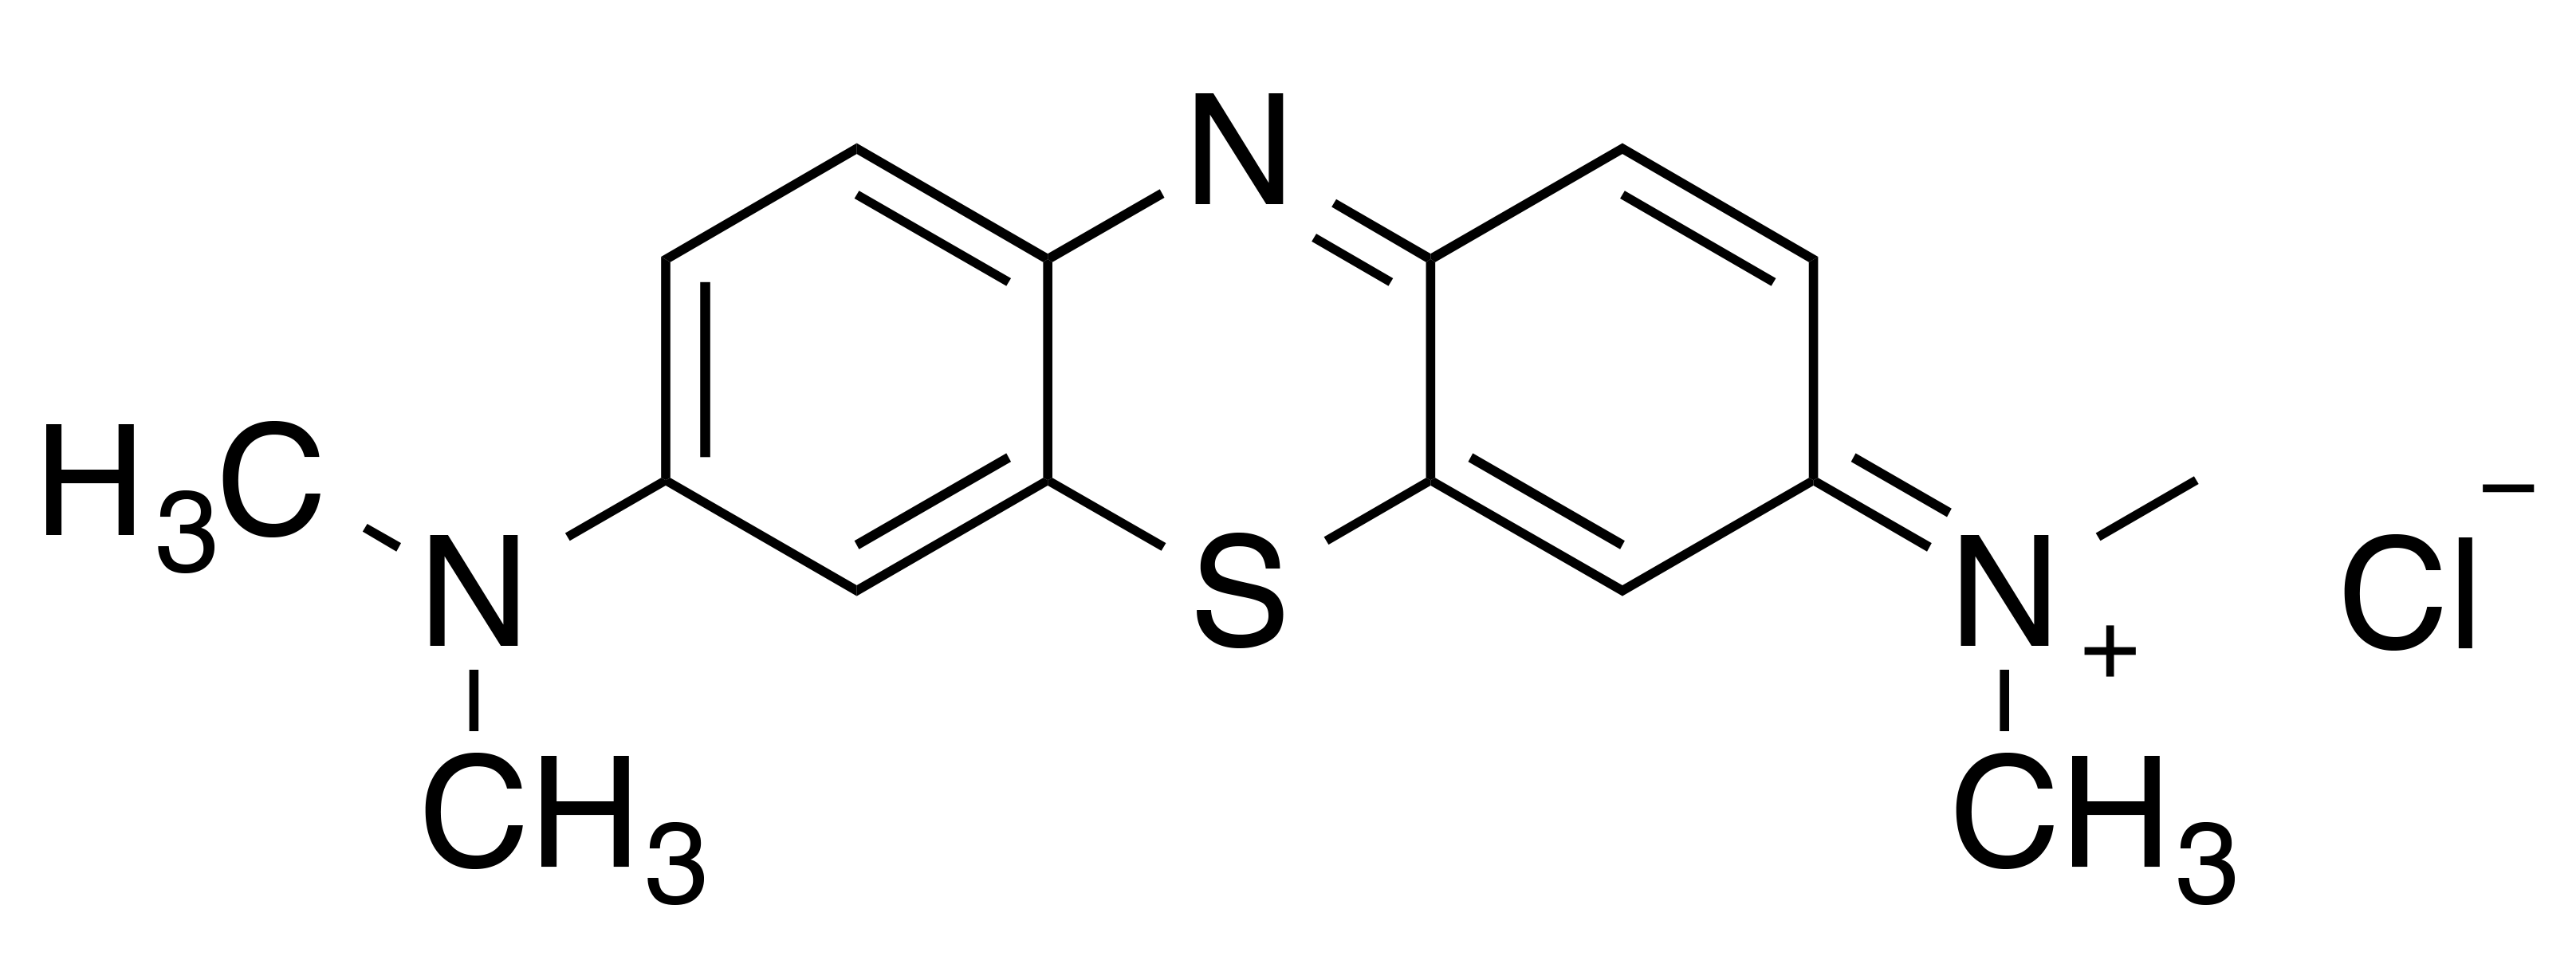 molecular structure of methylene blue